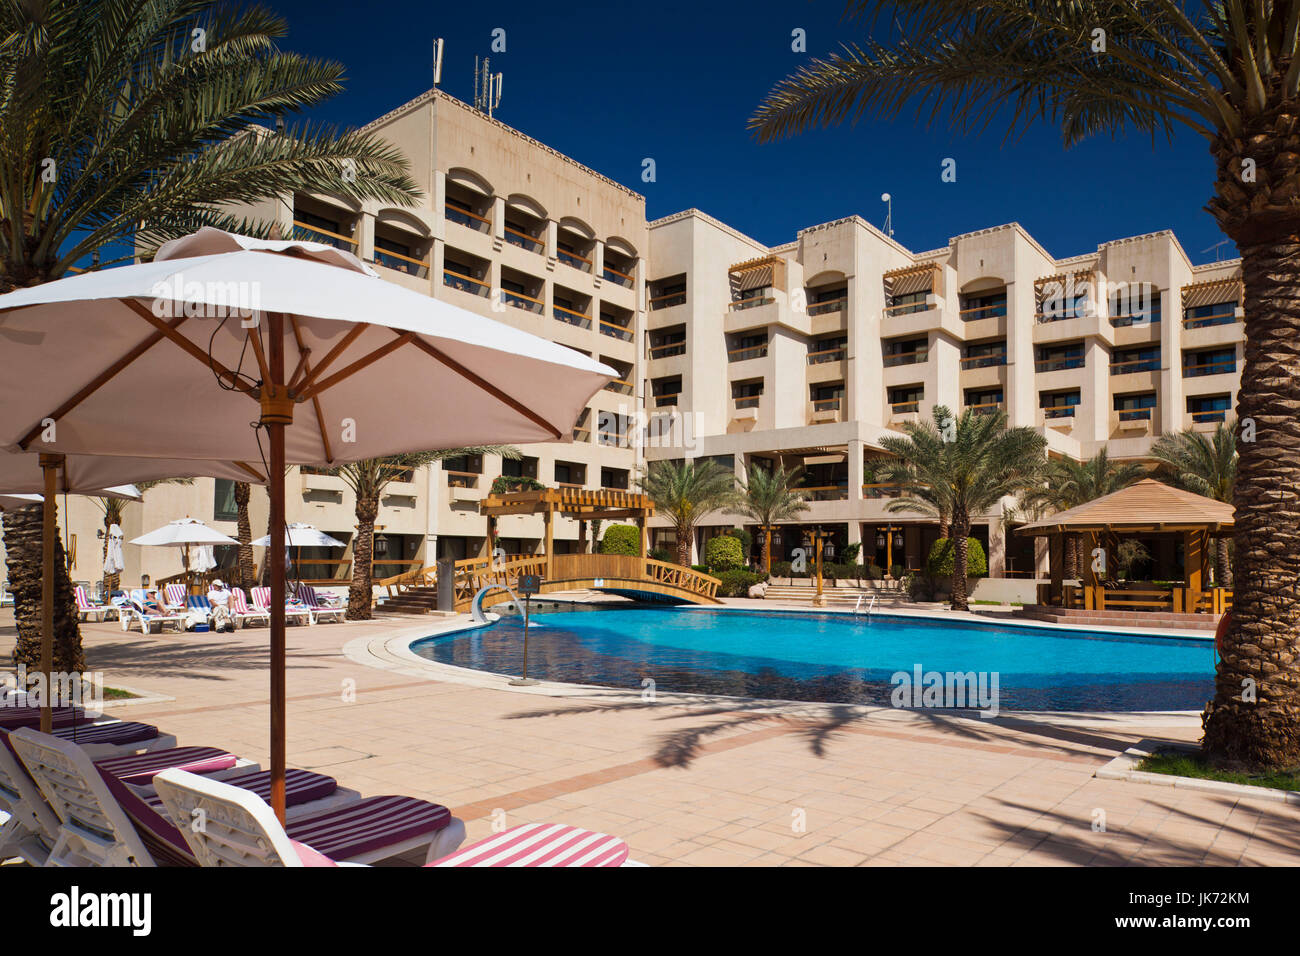 Jordan, Aqaba, Intercontinental Hotel Stock Photo - Alamy